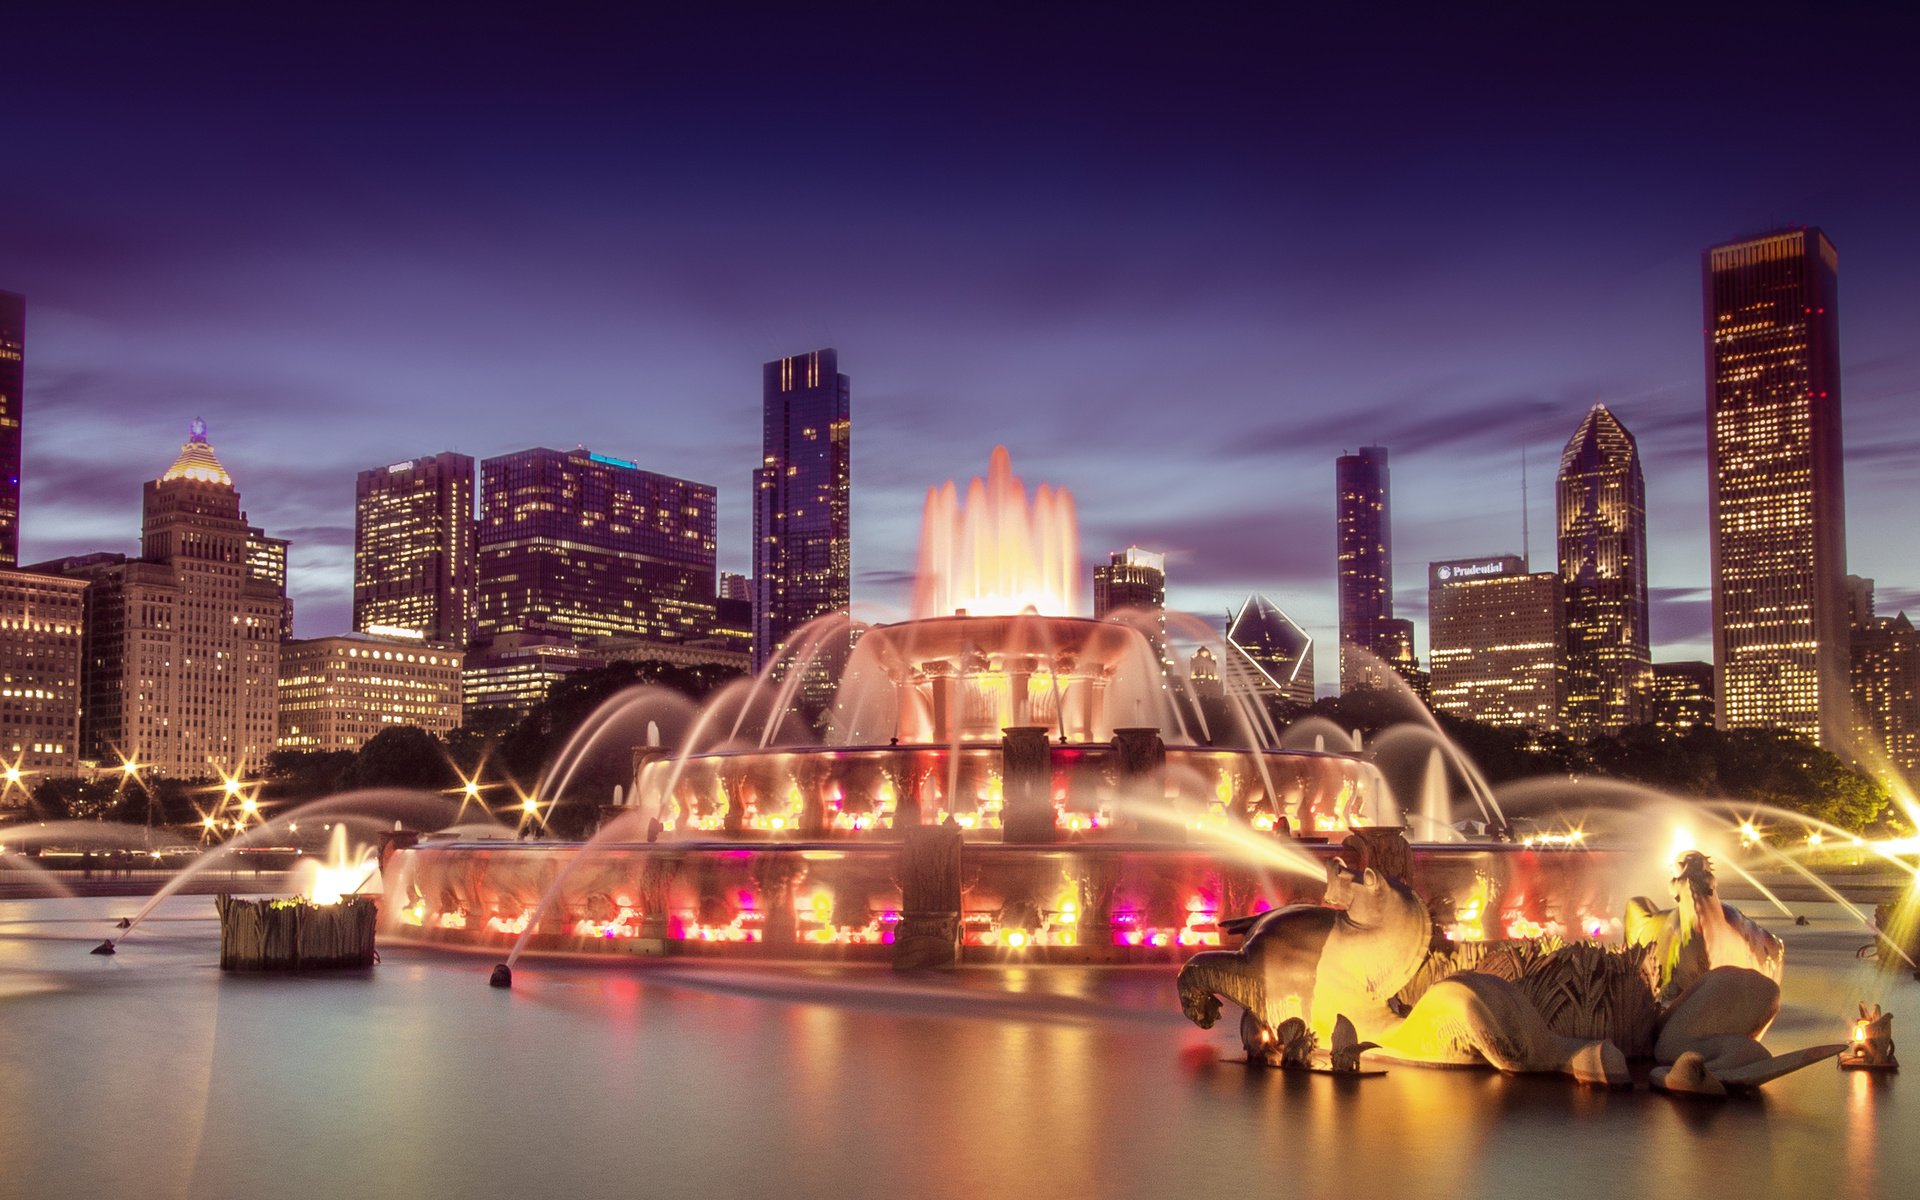 страны архитектура Букингемский фонтан США Чикагоо country architecture Buckingham fountain USA Chicago бесплатно